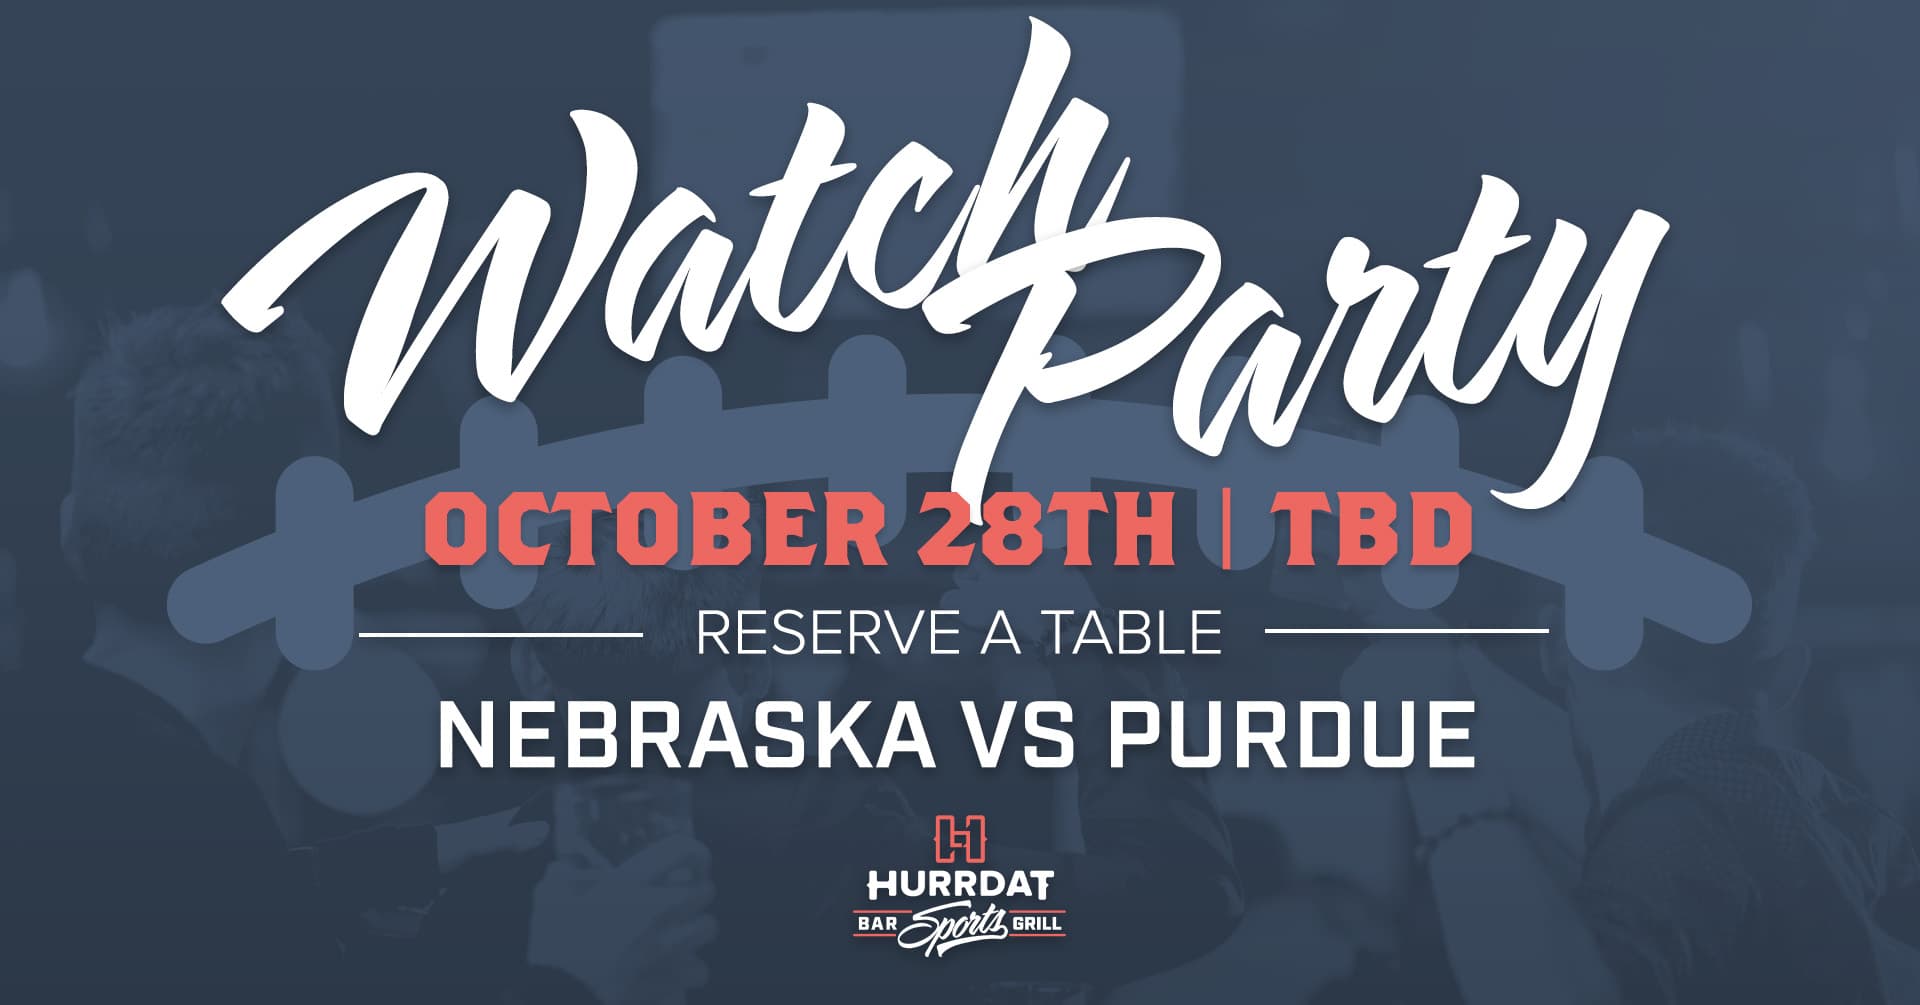 nebraska vs purdue watch party at hurrdat sports bar